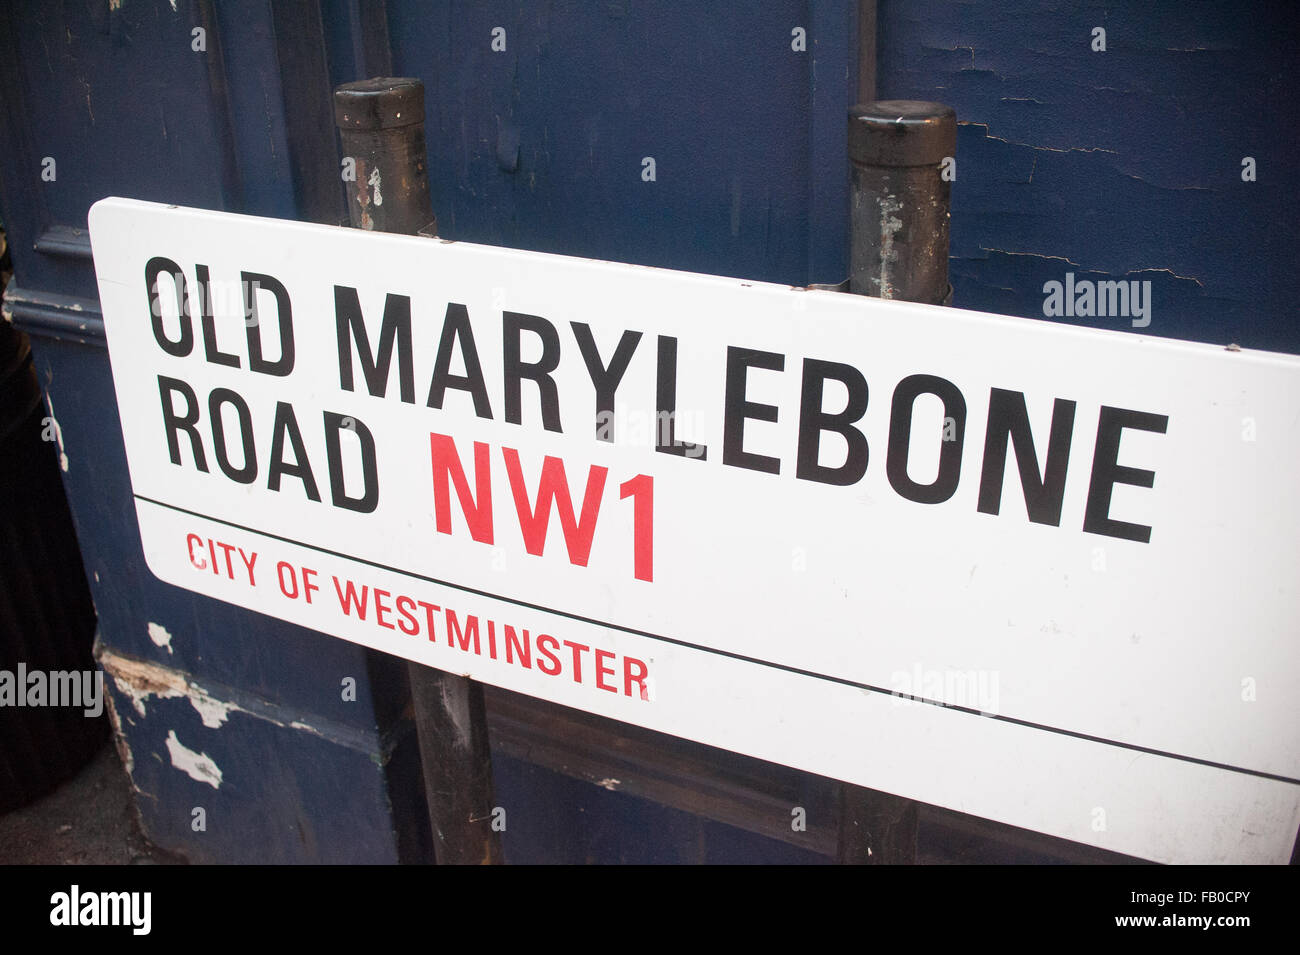 Alten Marylebone Road NW1 Straße anmelden, City of Westminster, London. Stockfoto